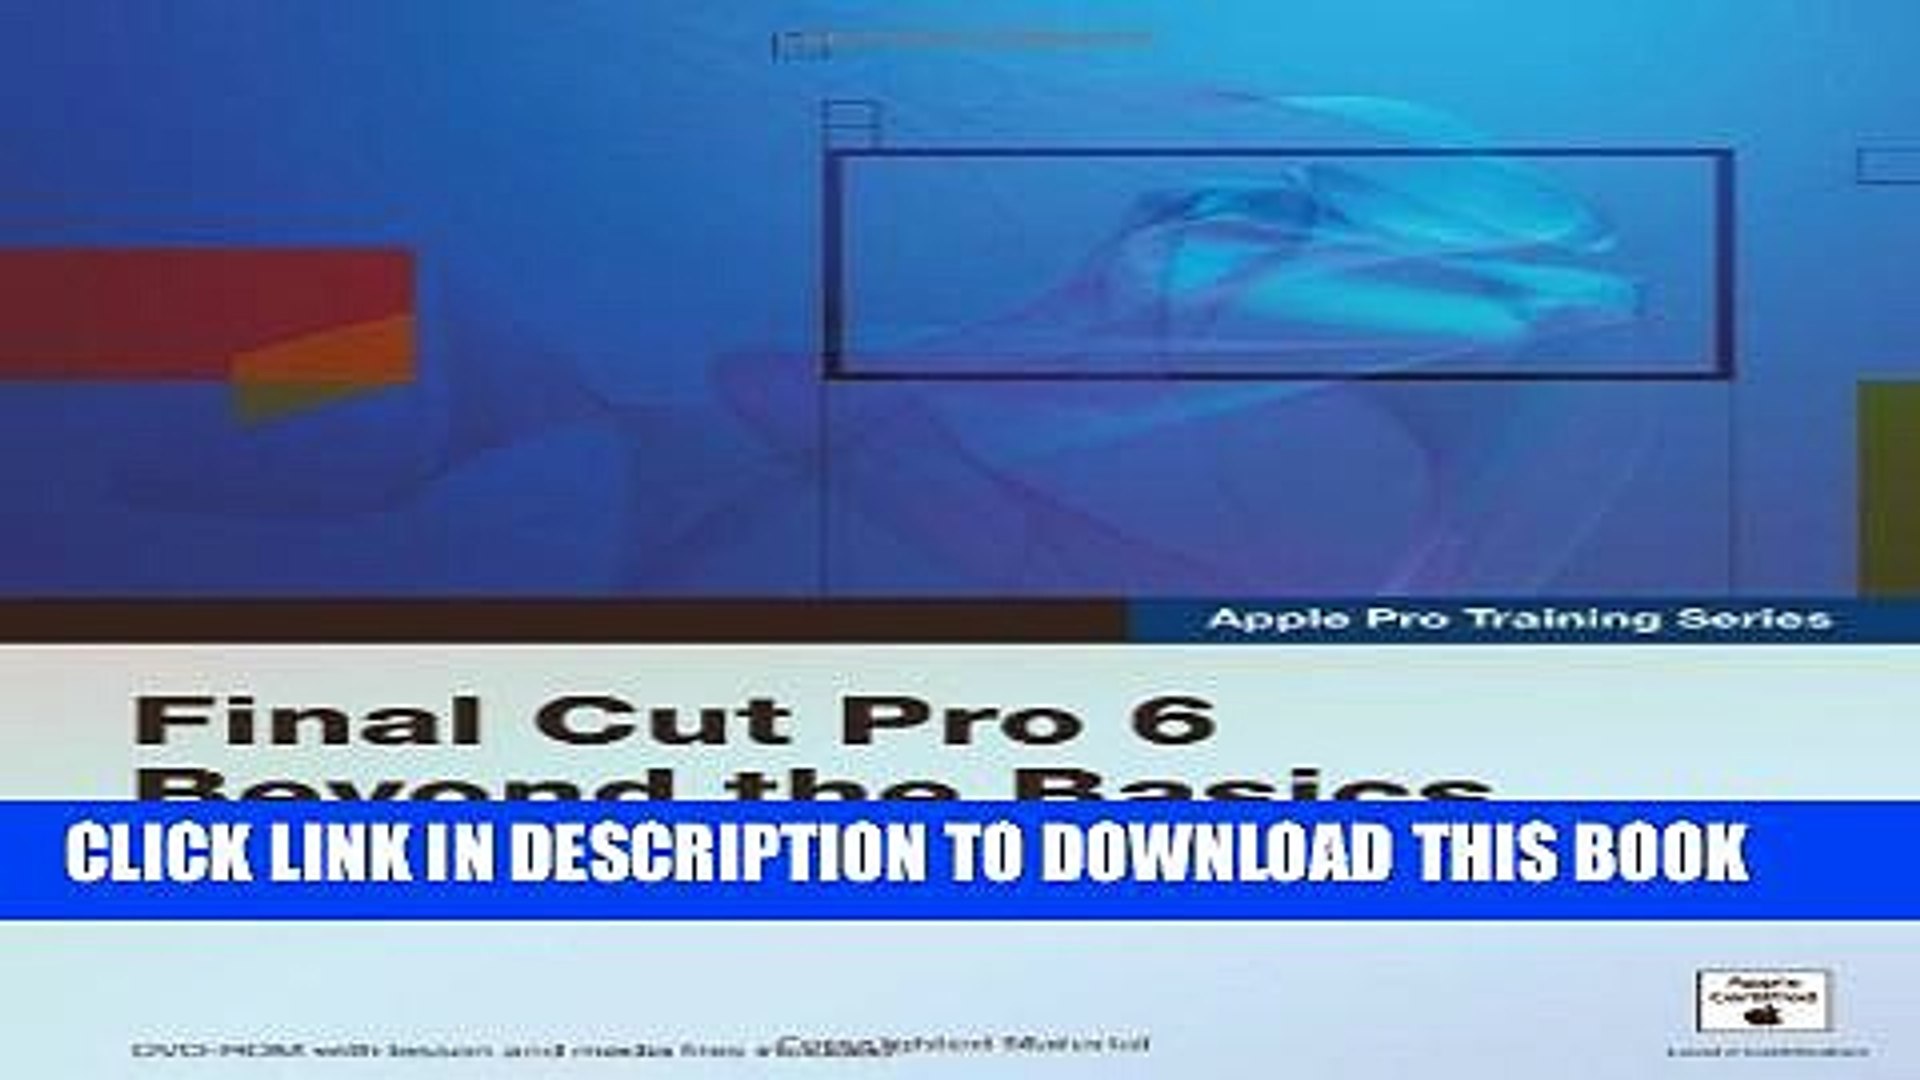 Final Cut Pro 6 User Manual